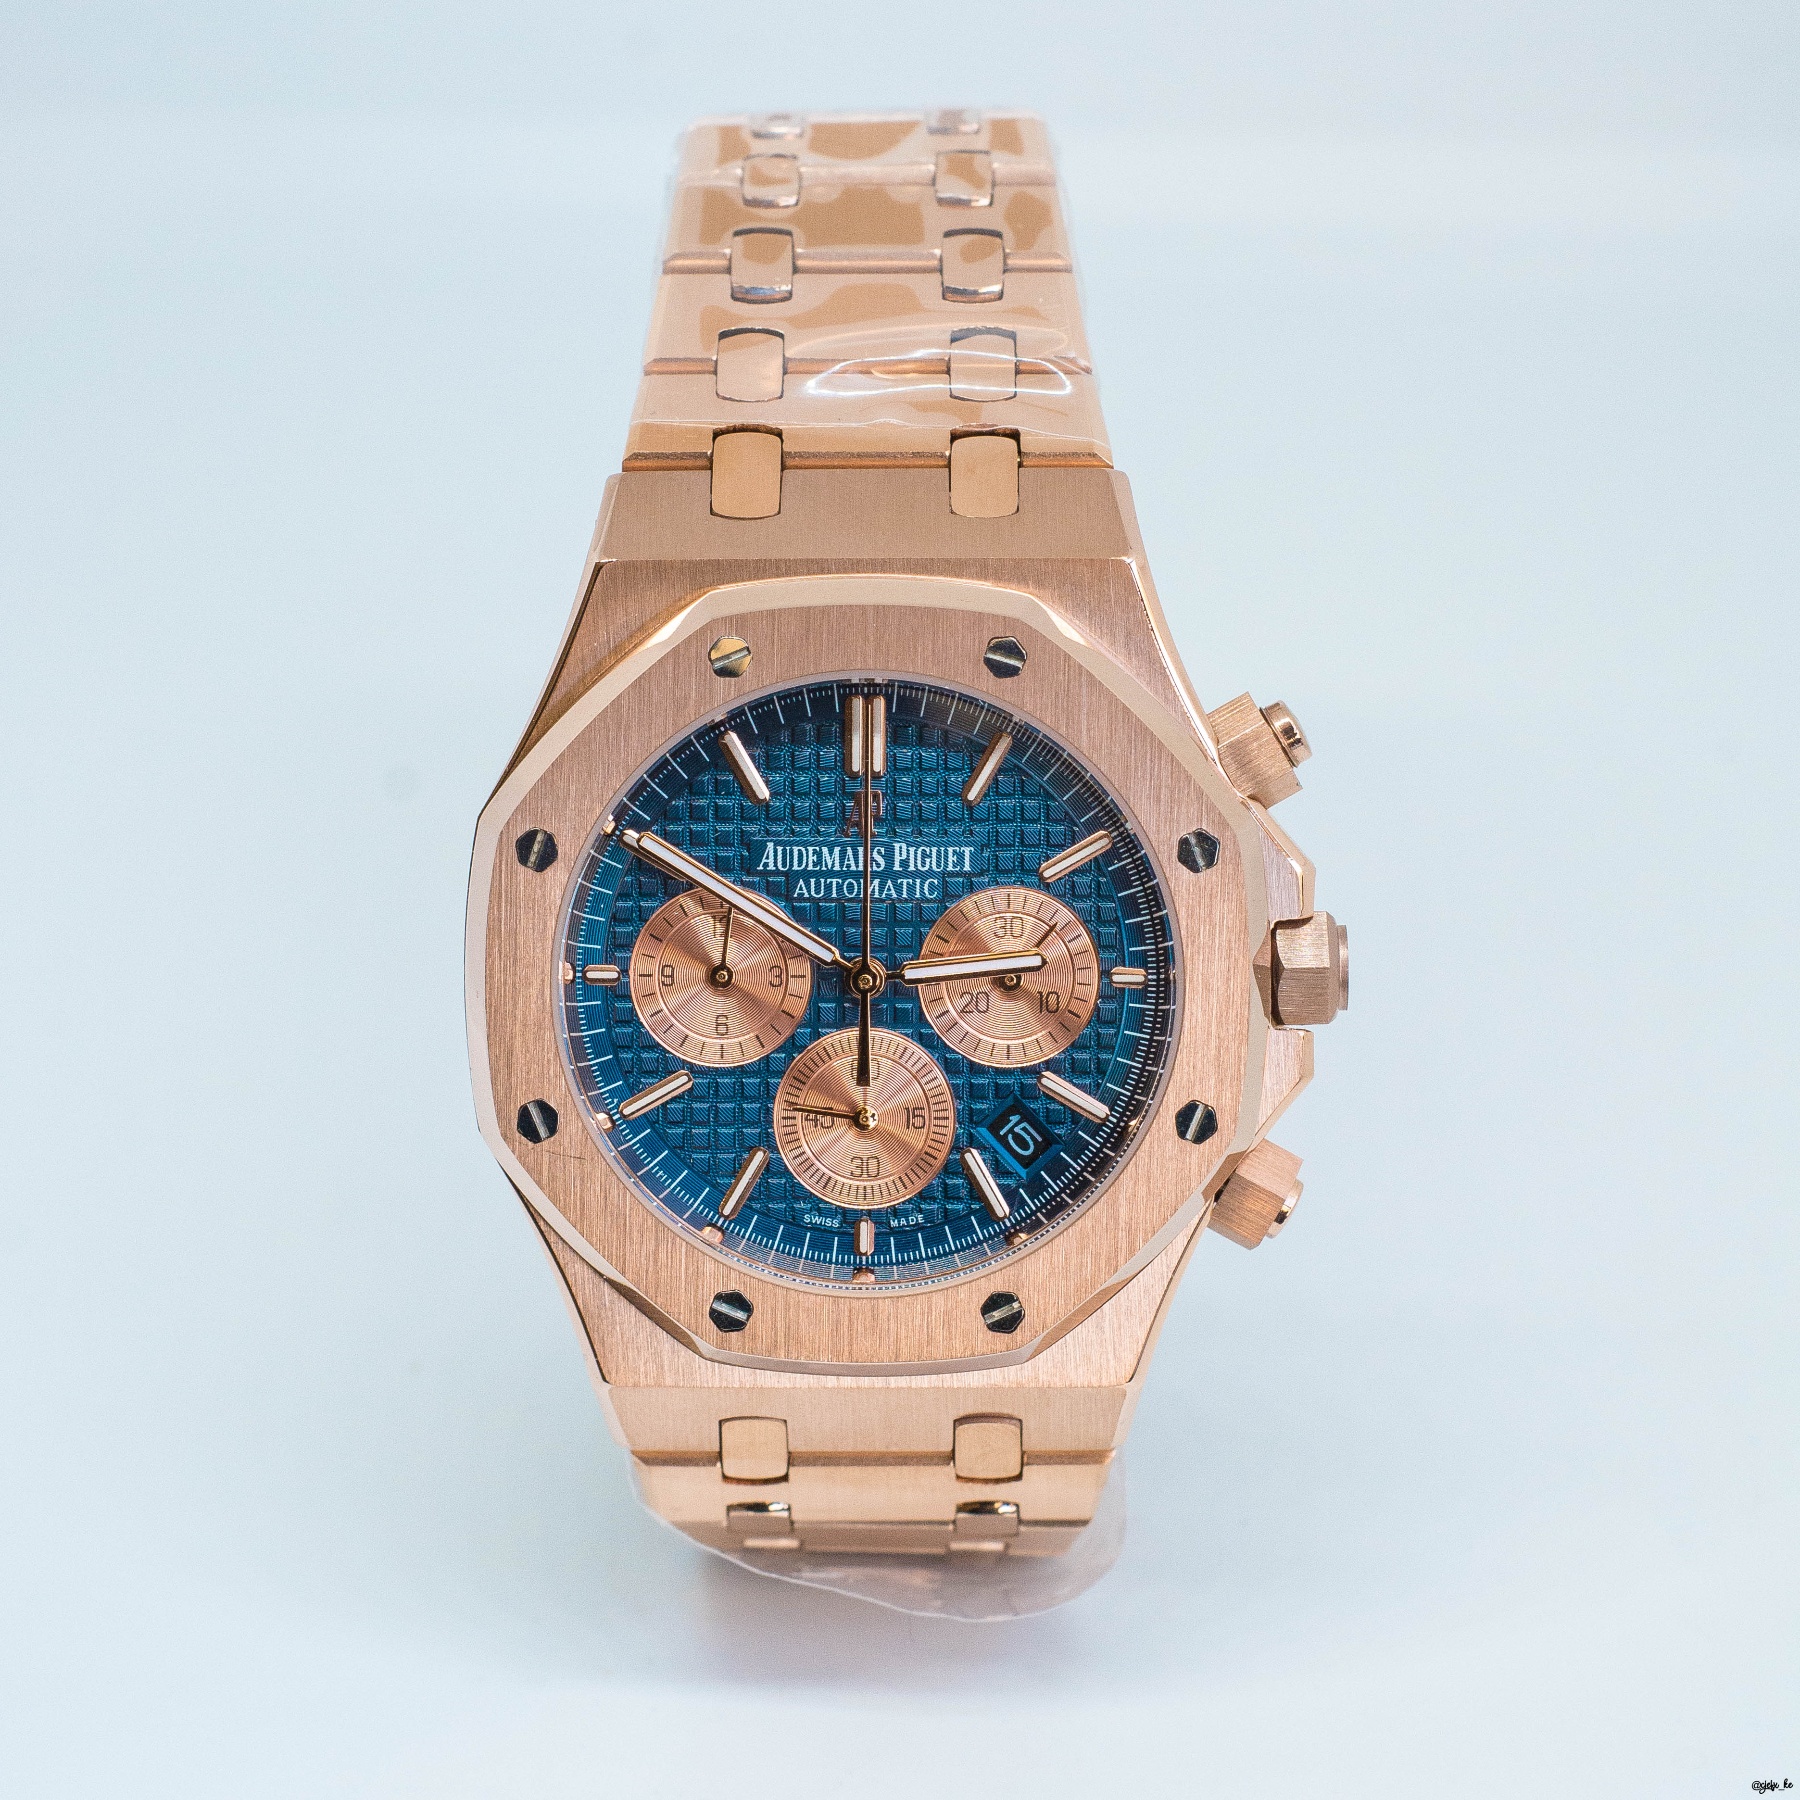 Audemars Piguet Royal Oak Blue Dial Chronograph watch for sale in Nairobi Kenya